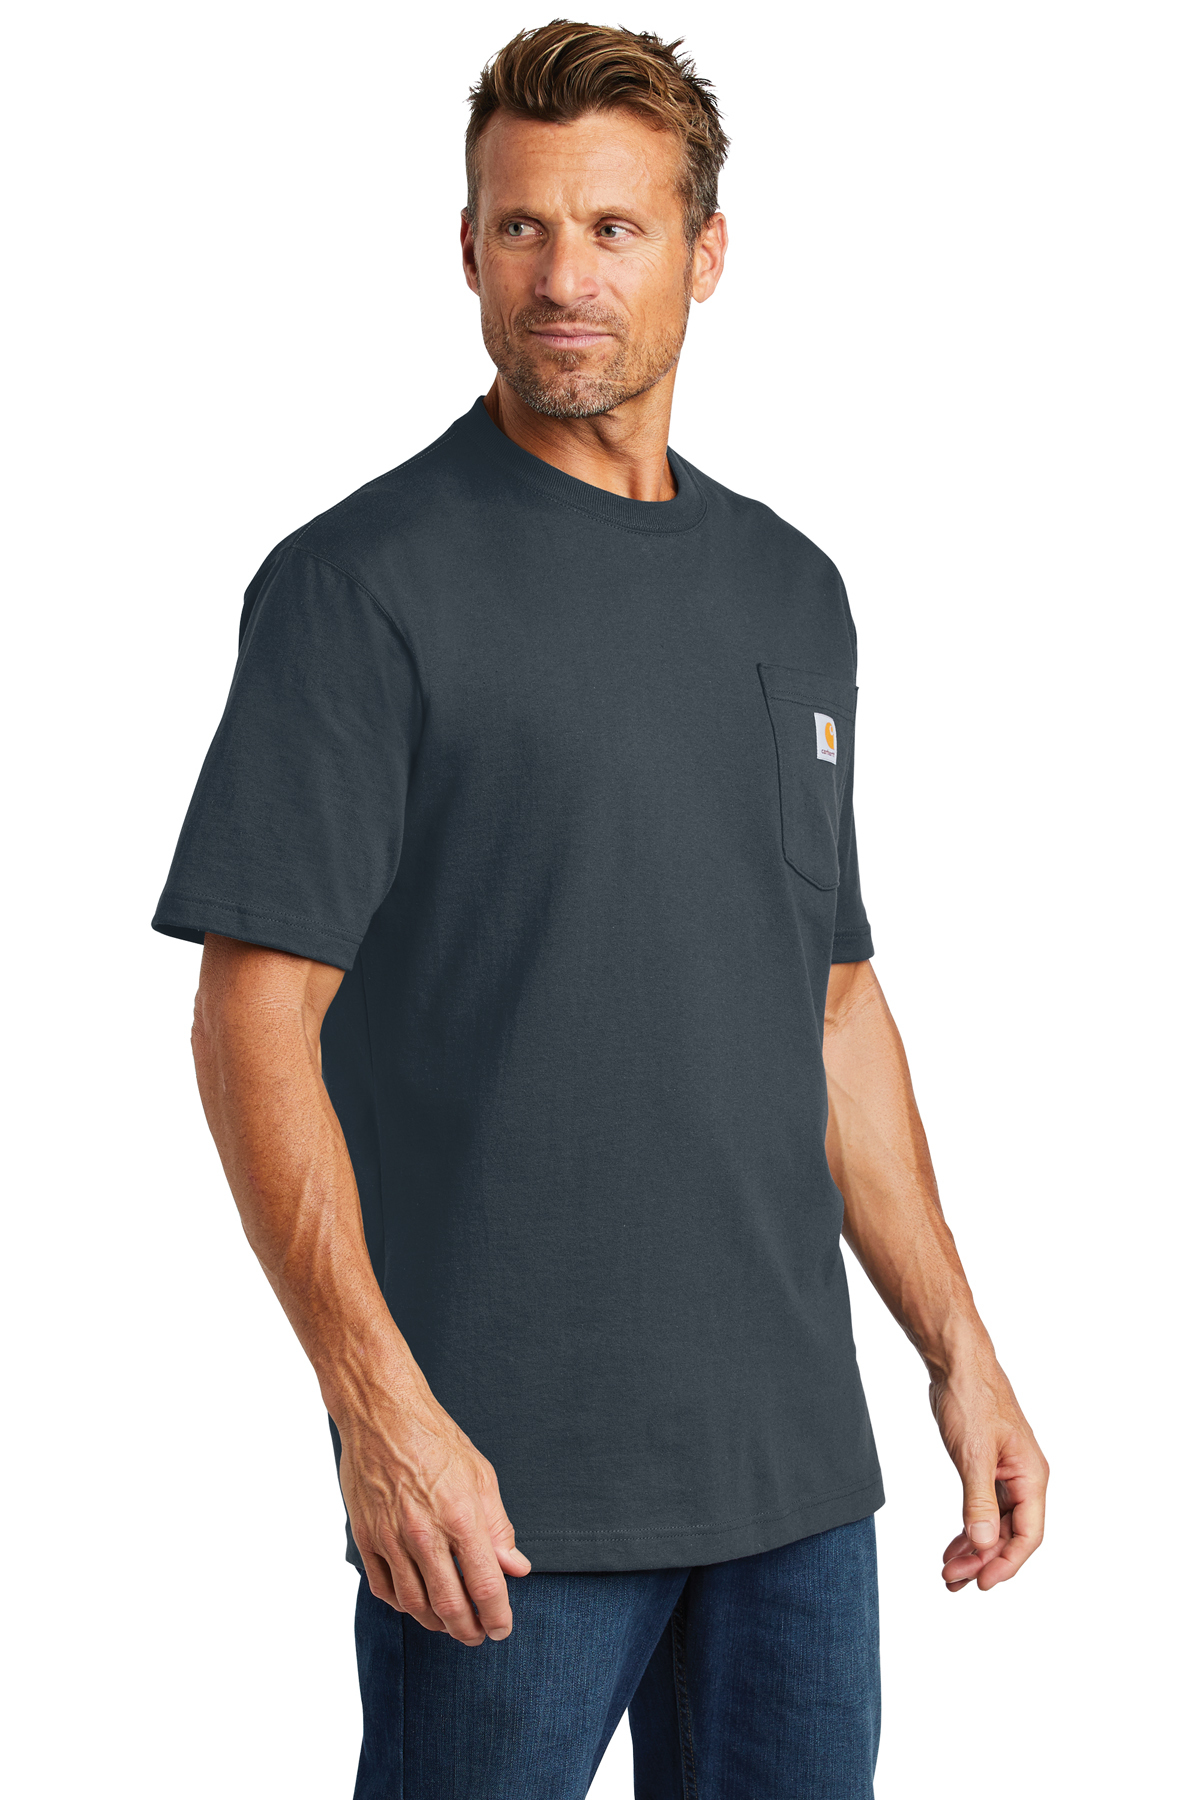 Carhartt Workwear Pocket Short Sleeve T-Shirt, Product